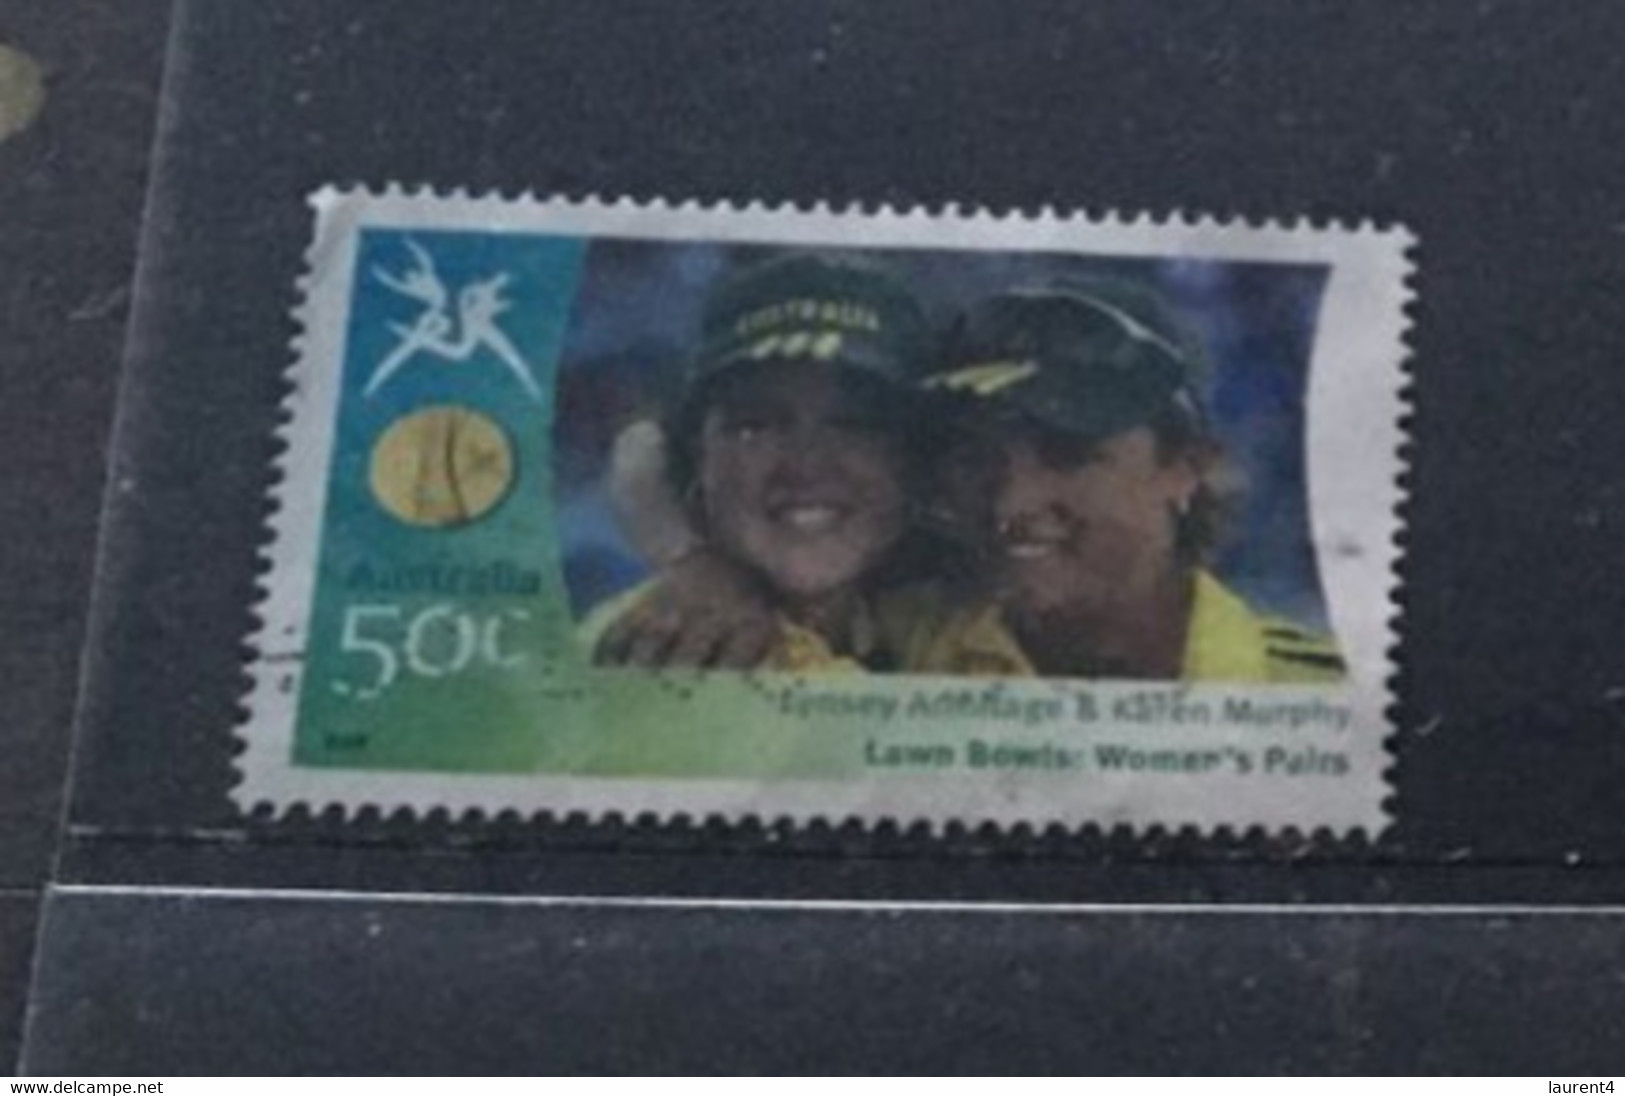 (stamp 17-7-2021) Australia Use Stamp (scarce) - Melbourne Commonweatlh Games Gold Medalist - Lawn Bowls - Petanca